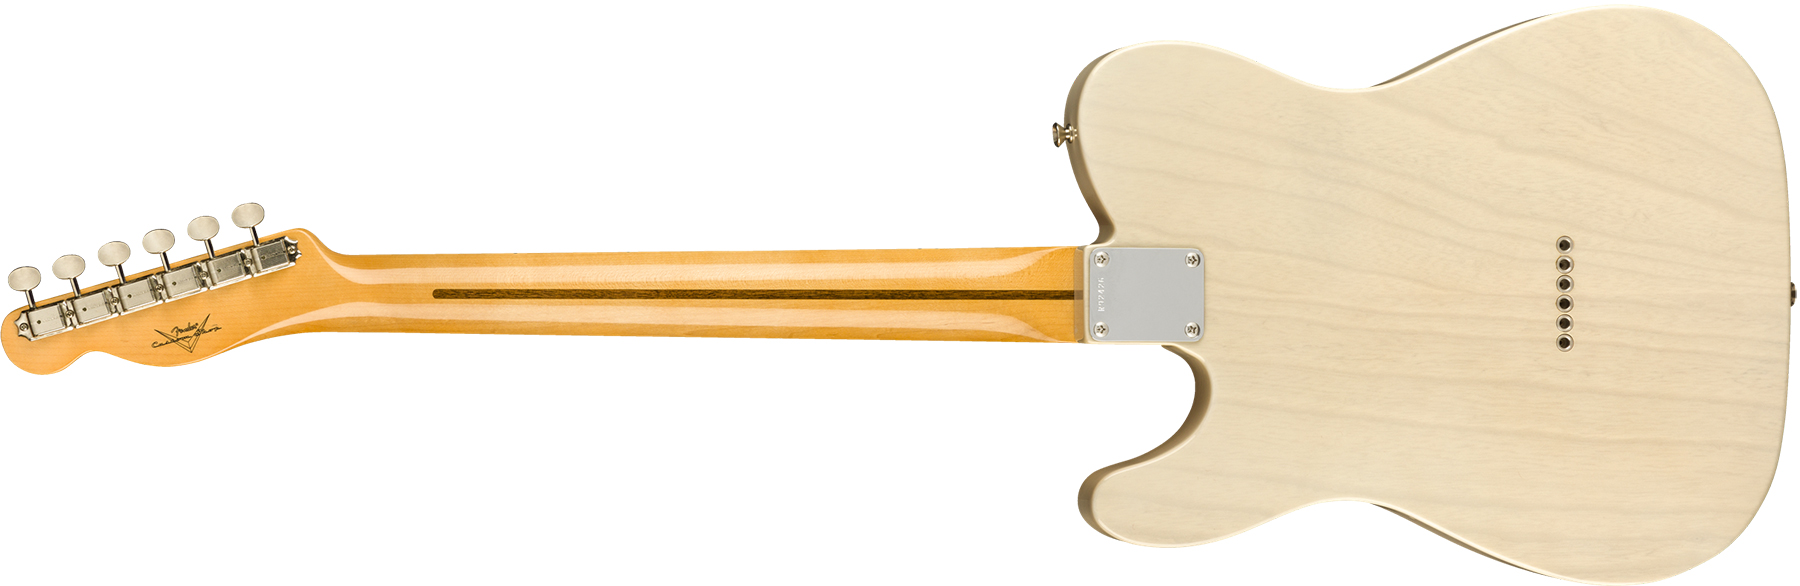 Fender Custom Shop Tele Vintage Custom 1958 Top Load Ltd Mn - Nos Aged White Blonde - Guitarra eléctrica con forma de tel - Variation 1